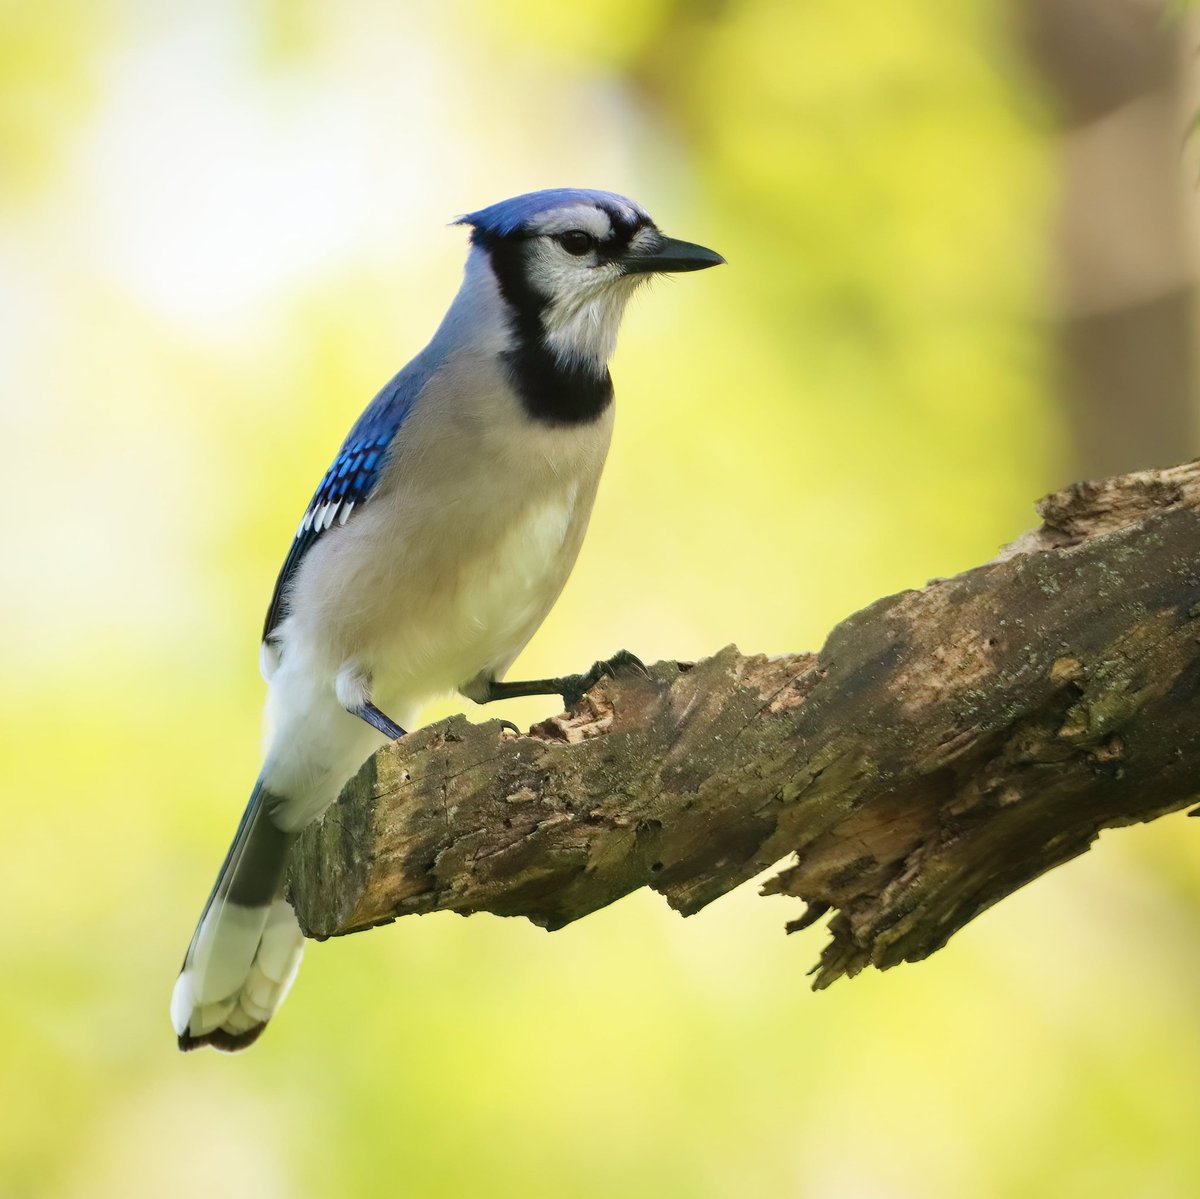 What a cutie!
#bluejaybird #bluejays #bluejay #bluejayvisit #bluejayvisitor #birdcommunity #birdworld #birdwatching #birdlife #birdloversclub #birdlovers #birdwatchersdaily #birdwatcher #birdsonearth #beavercreekbirding